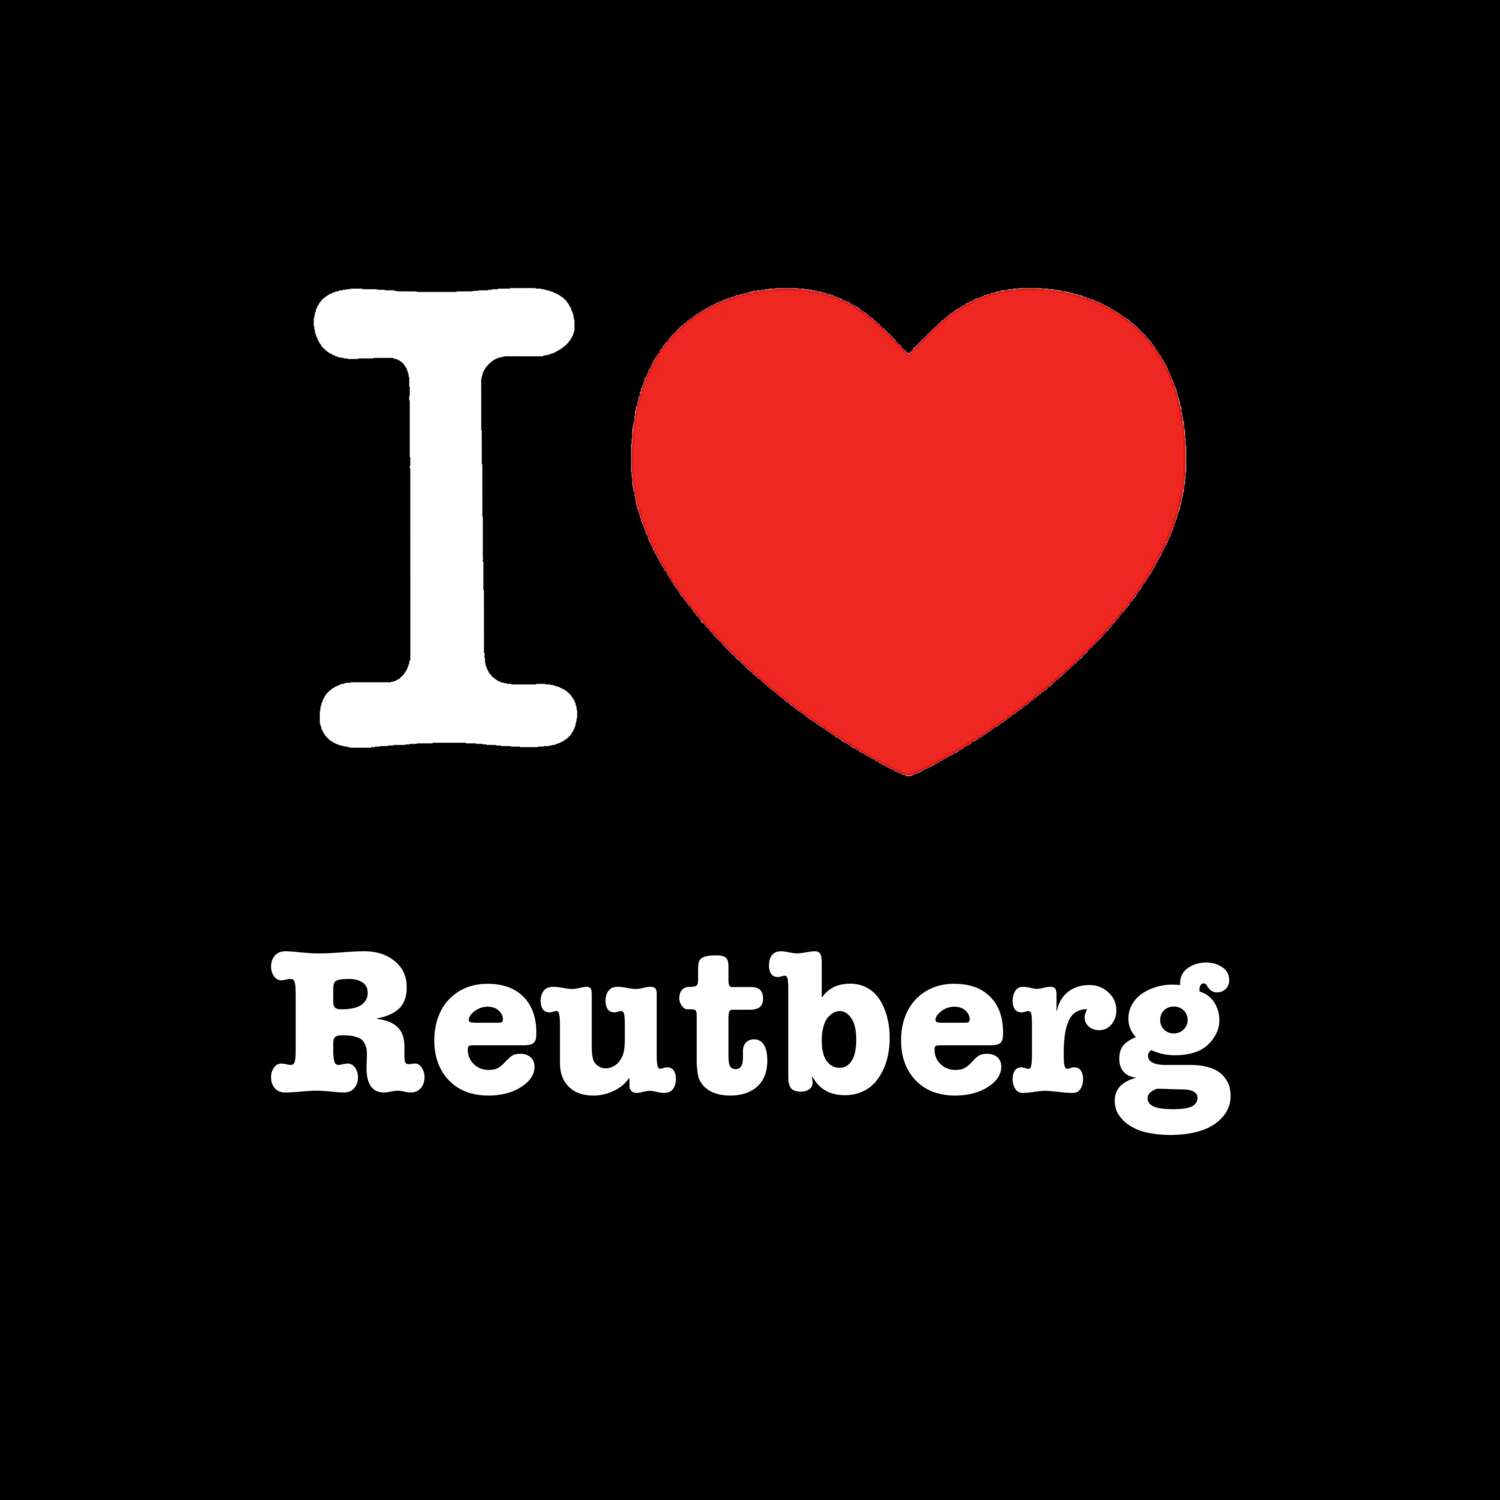 Reutberg T-Shirt »I love«